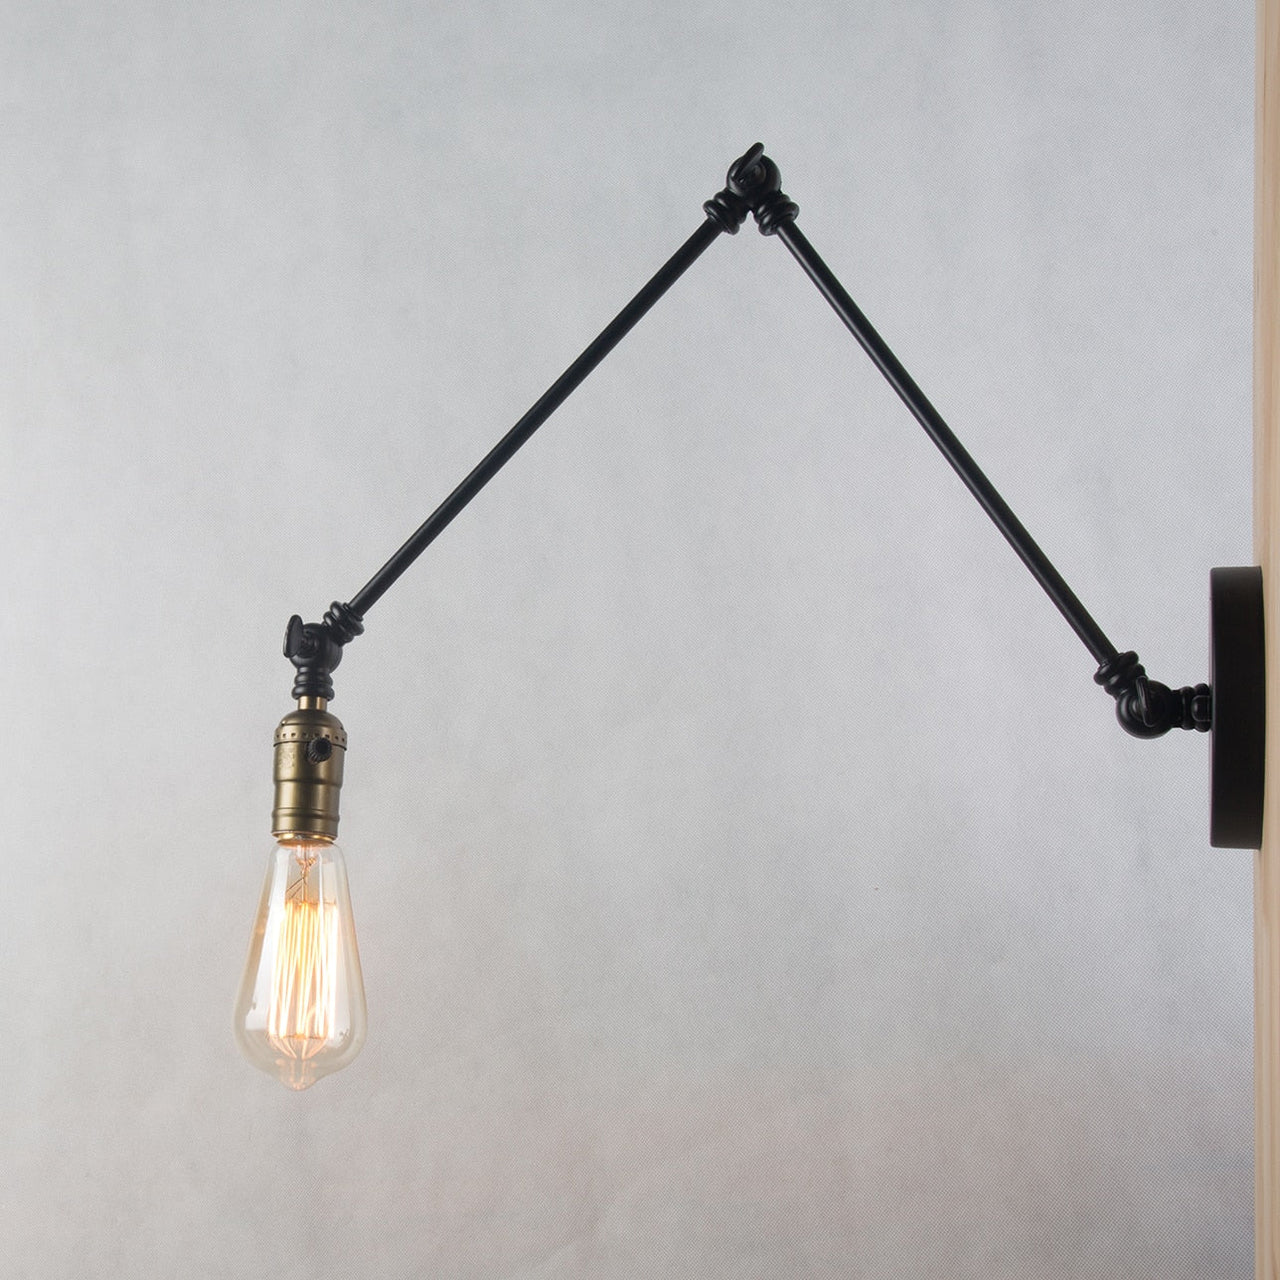 Vintage Industrial Wall Lamp - Adjustable Swing Arm - Casatrail.com